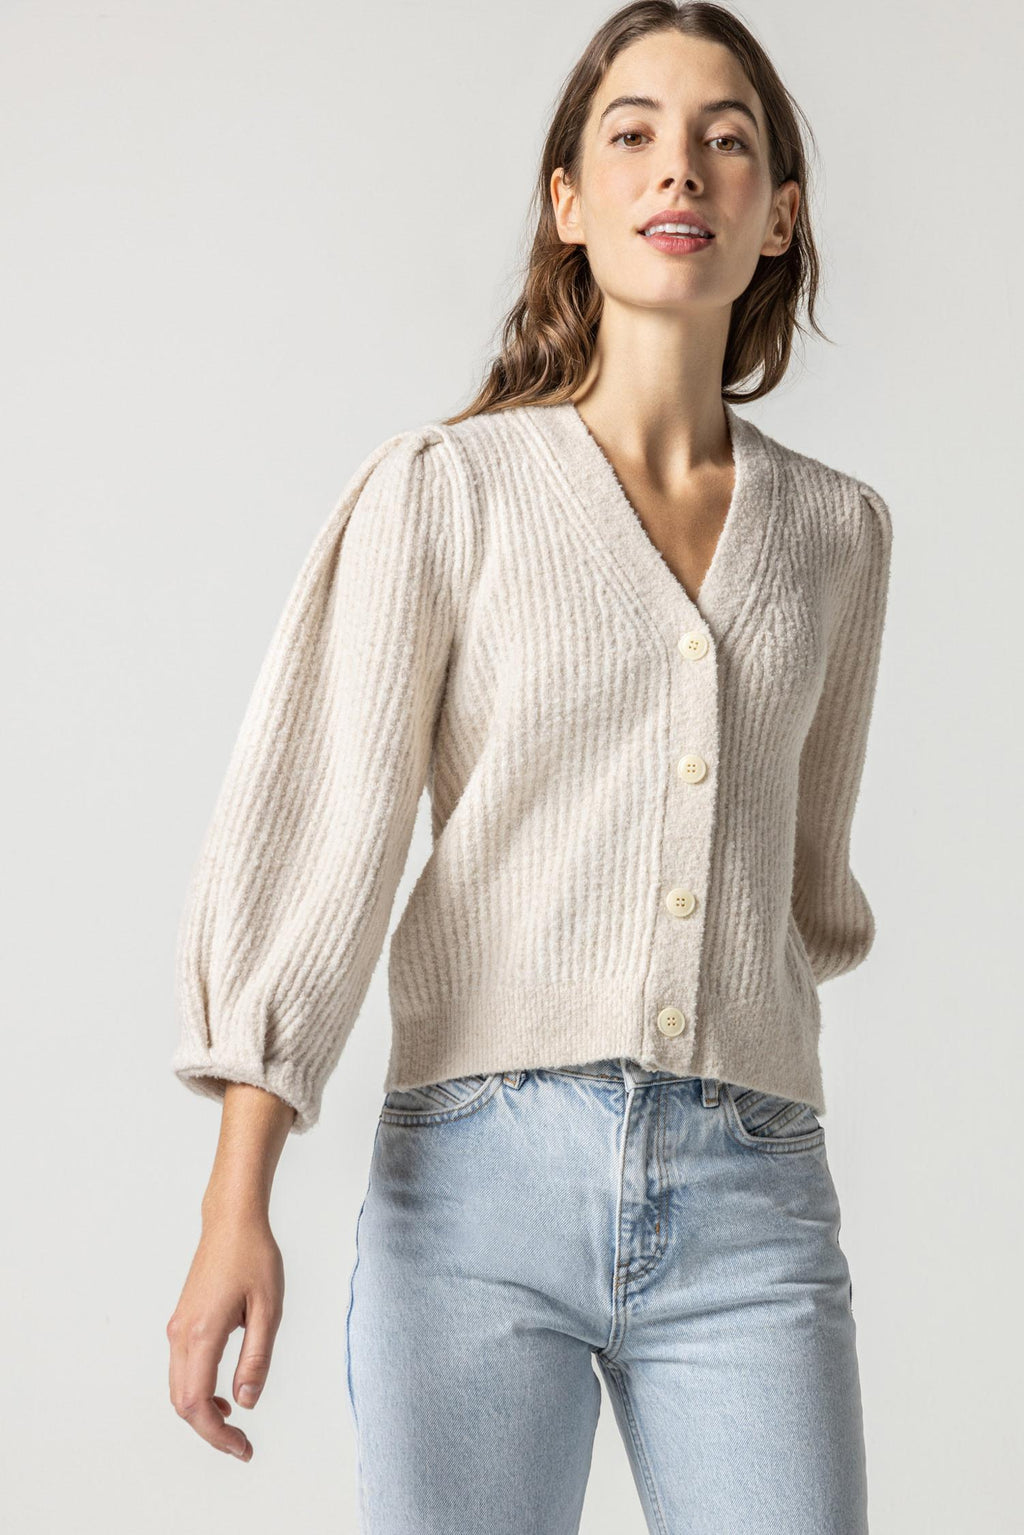 – Mint Julep 2 – Sweaters Page